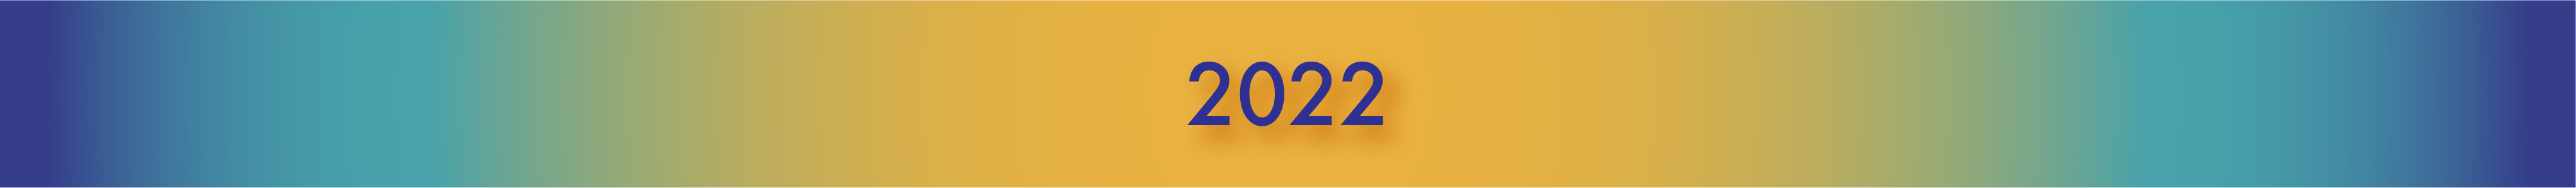 2022 Gallery Banner